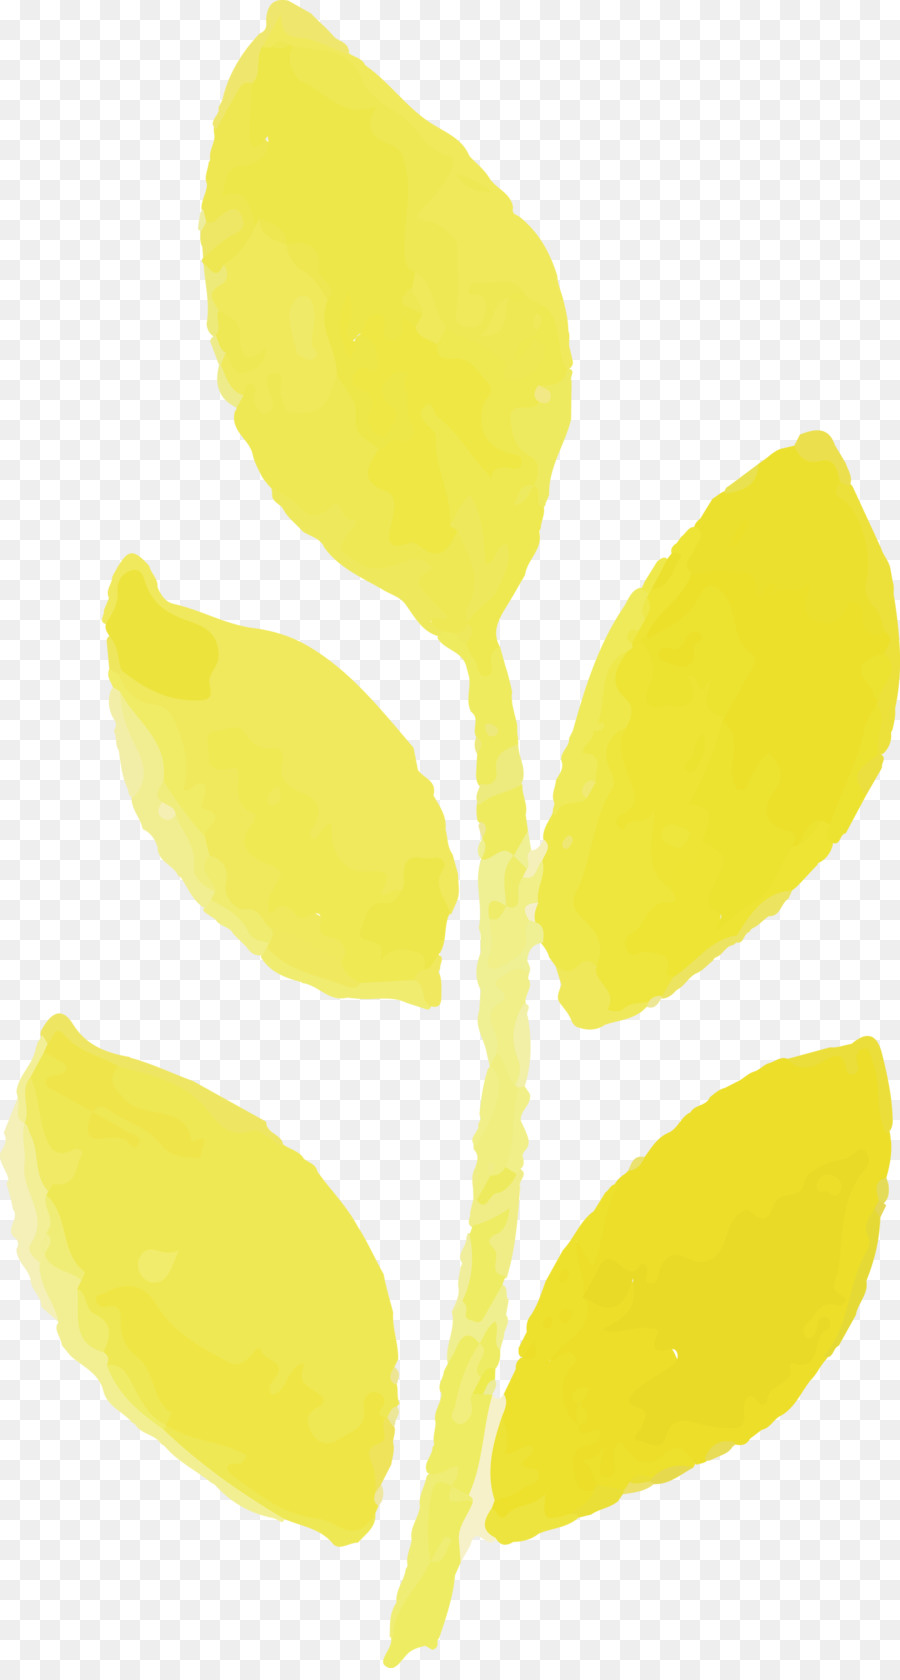 plant stem leaf yellow commodity fruit